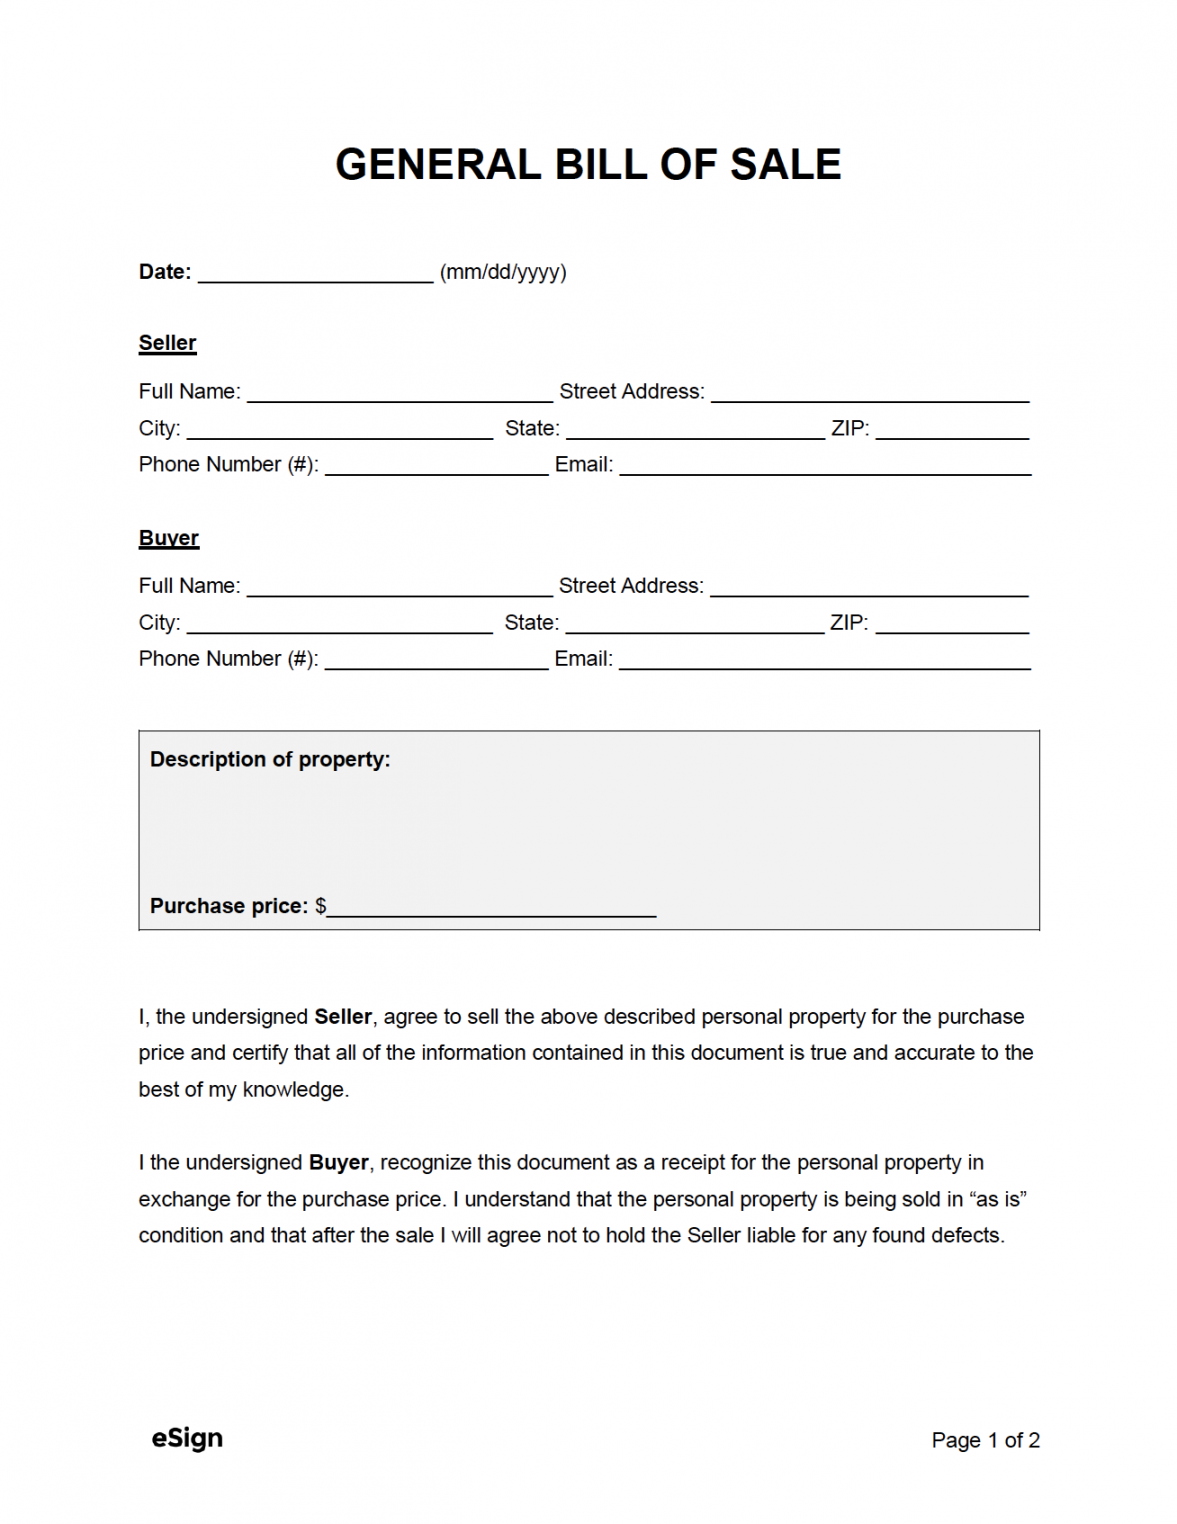 Free General Bill of Sale Form  PDF  Word - FREE Printables - Free Printable Bill Of Sale